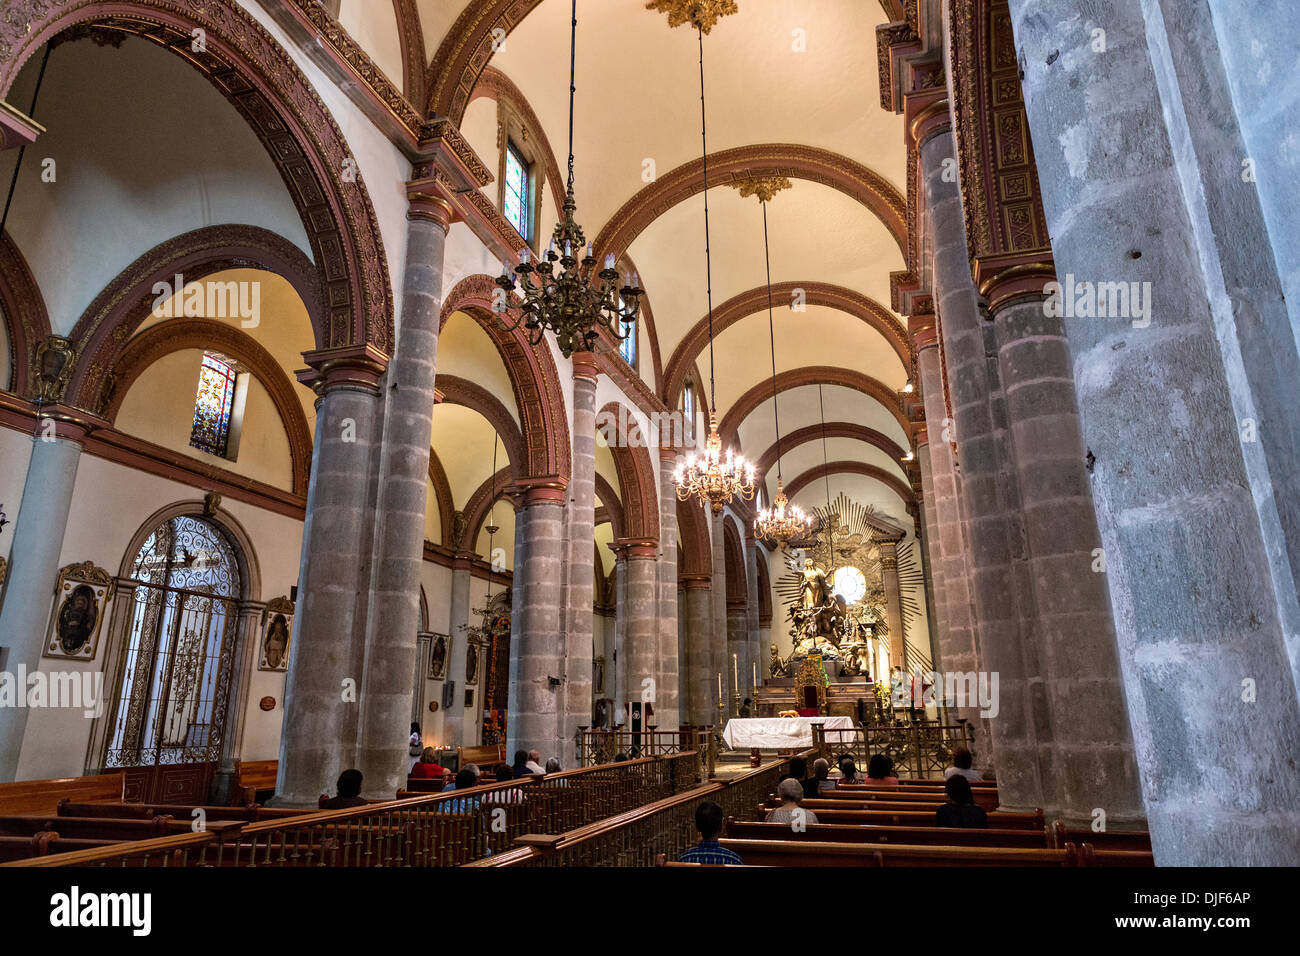 Innenraum der Kathedrale unserer lieben Frau Mariä Himmelfahrt in Oaxaca, Mexiko. Stockfoto